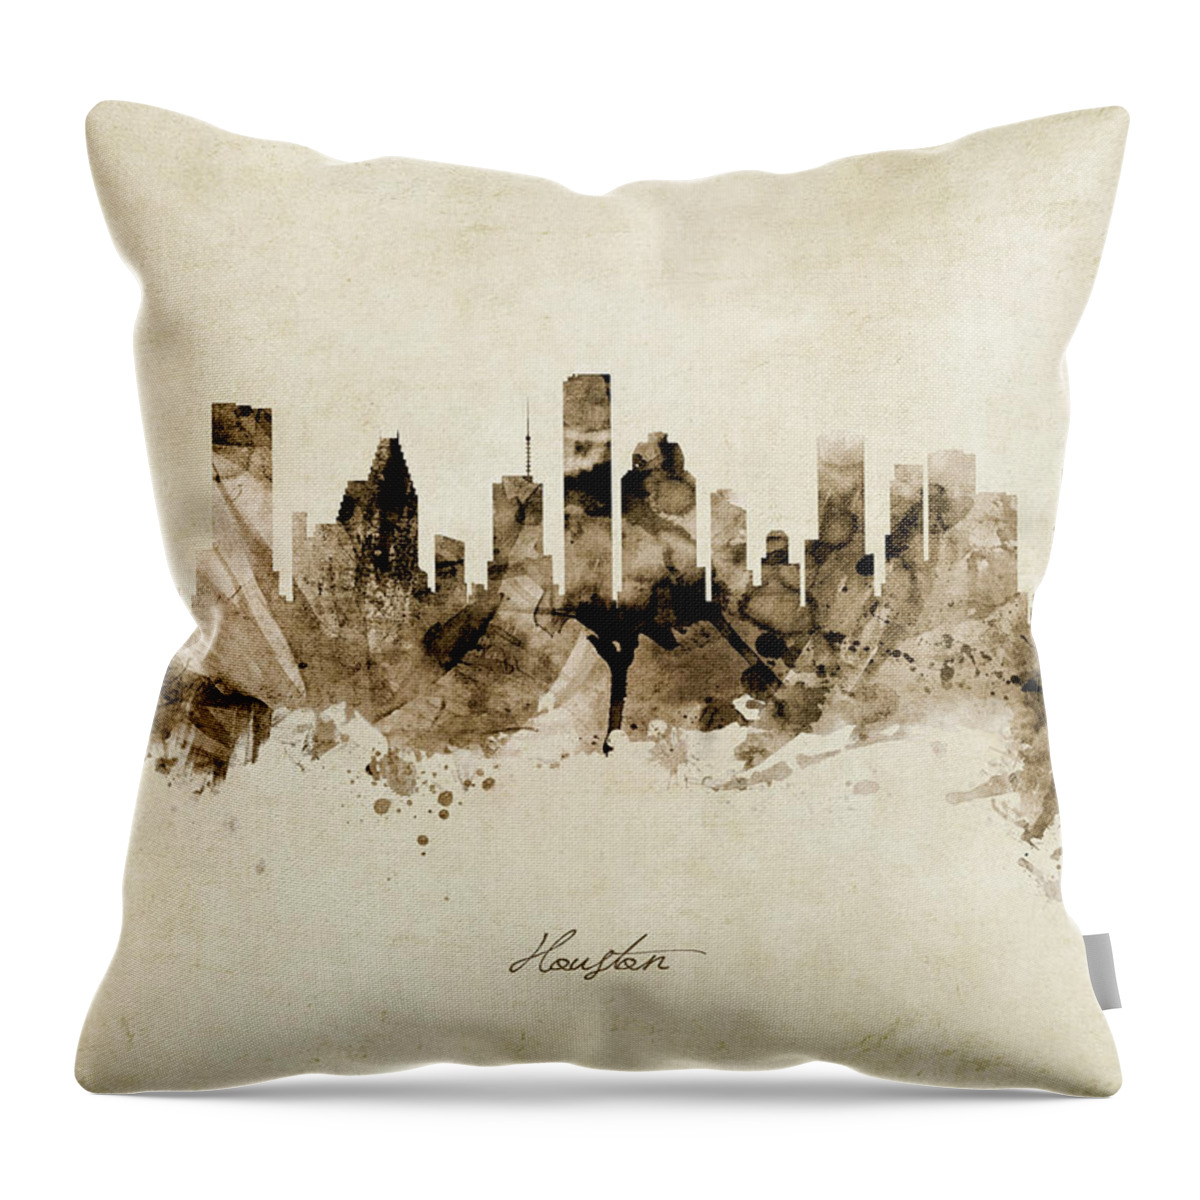 Houston Throw Pillow featuring the digital art Houston Texas Skyline by Michael Tompsett